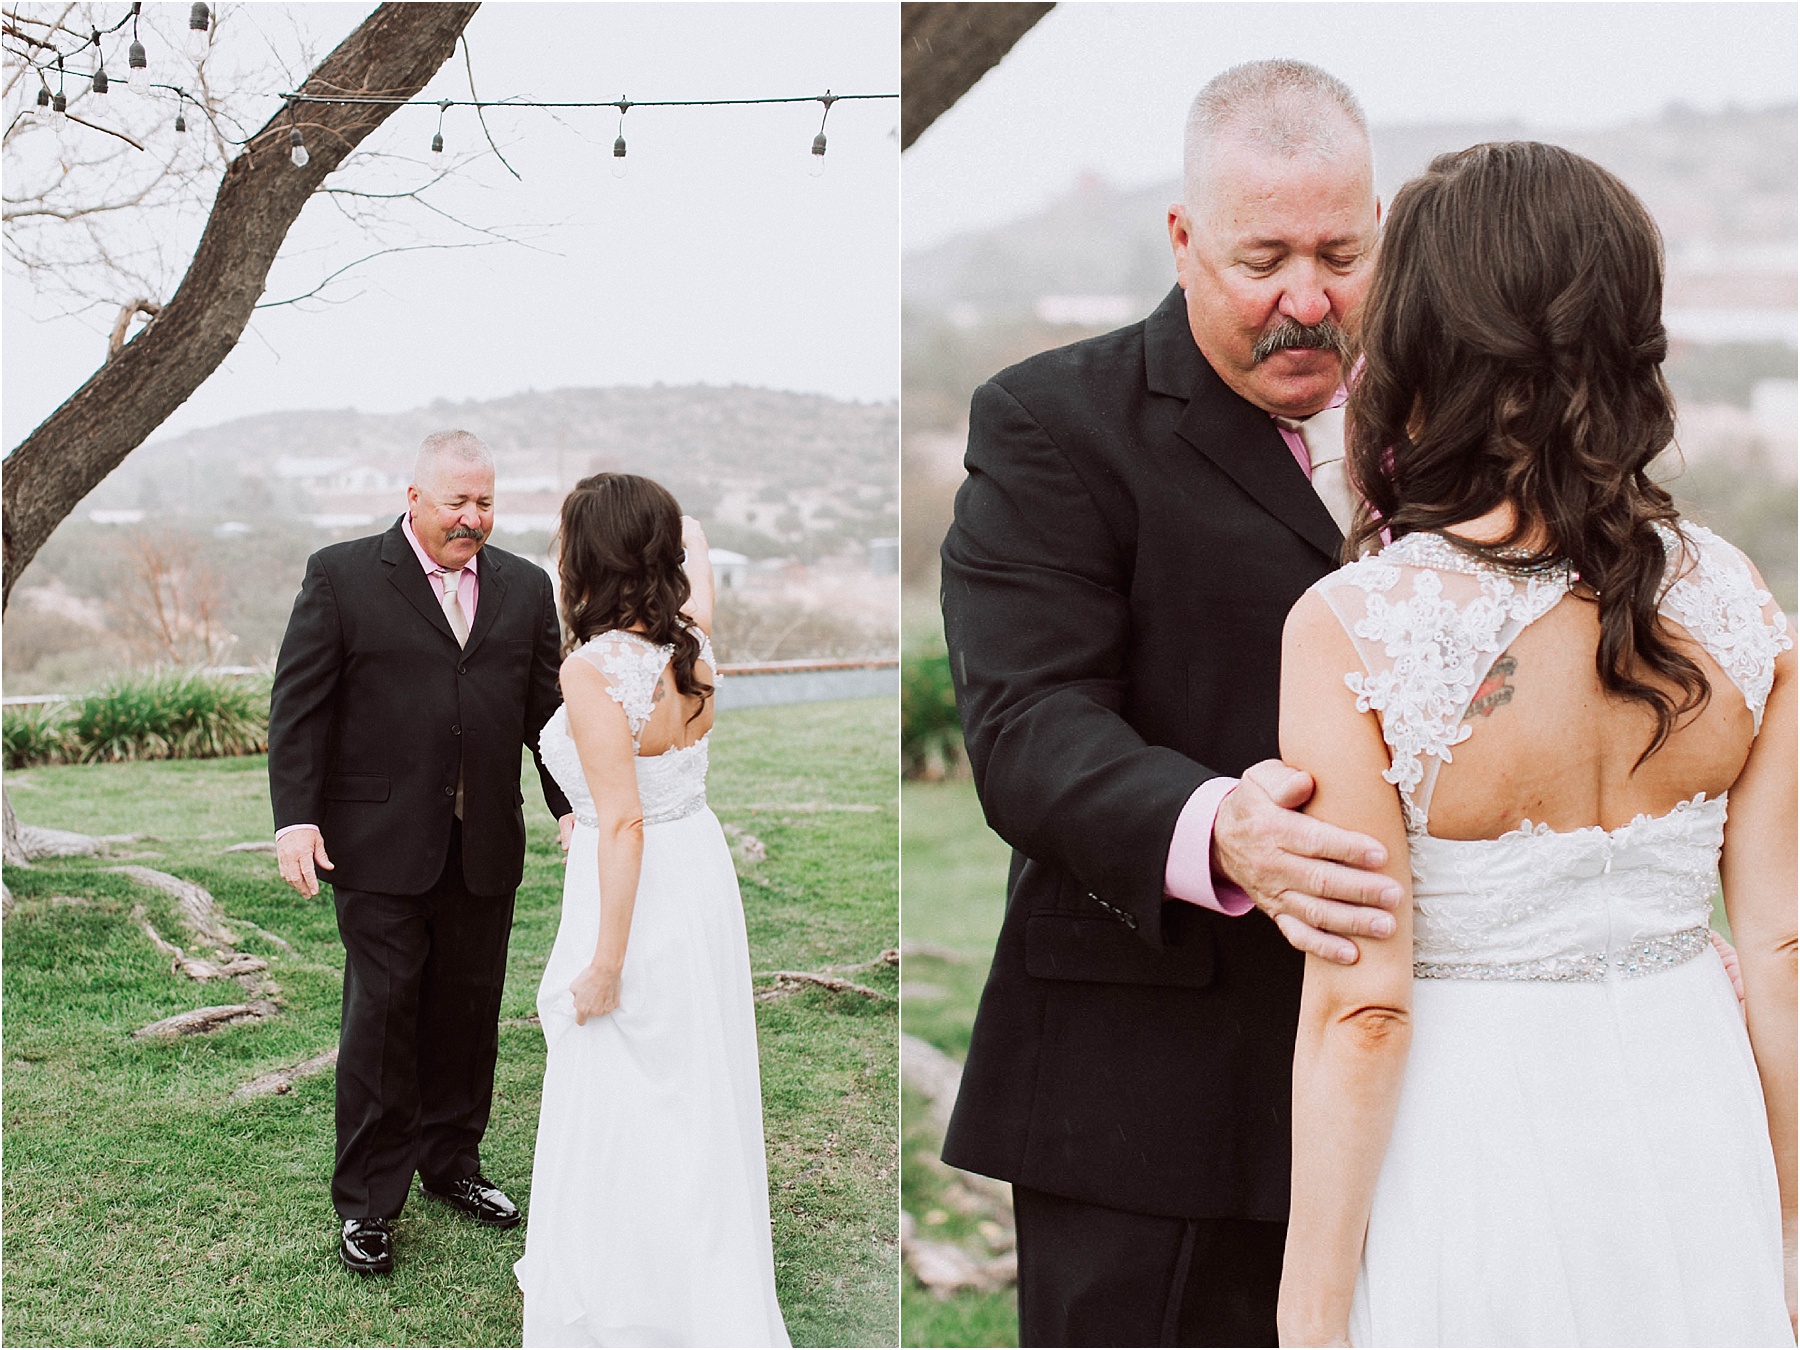 Santa Clarita Intimate Wedding & Elopement Photography - First look with bride's dad